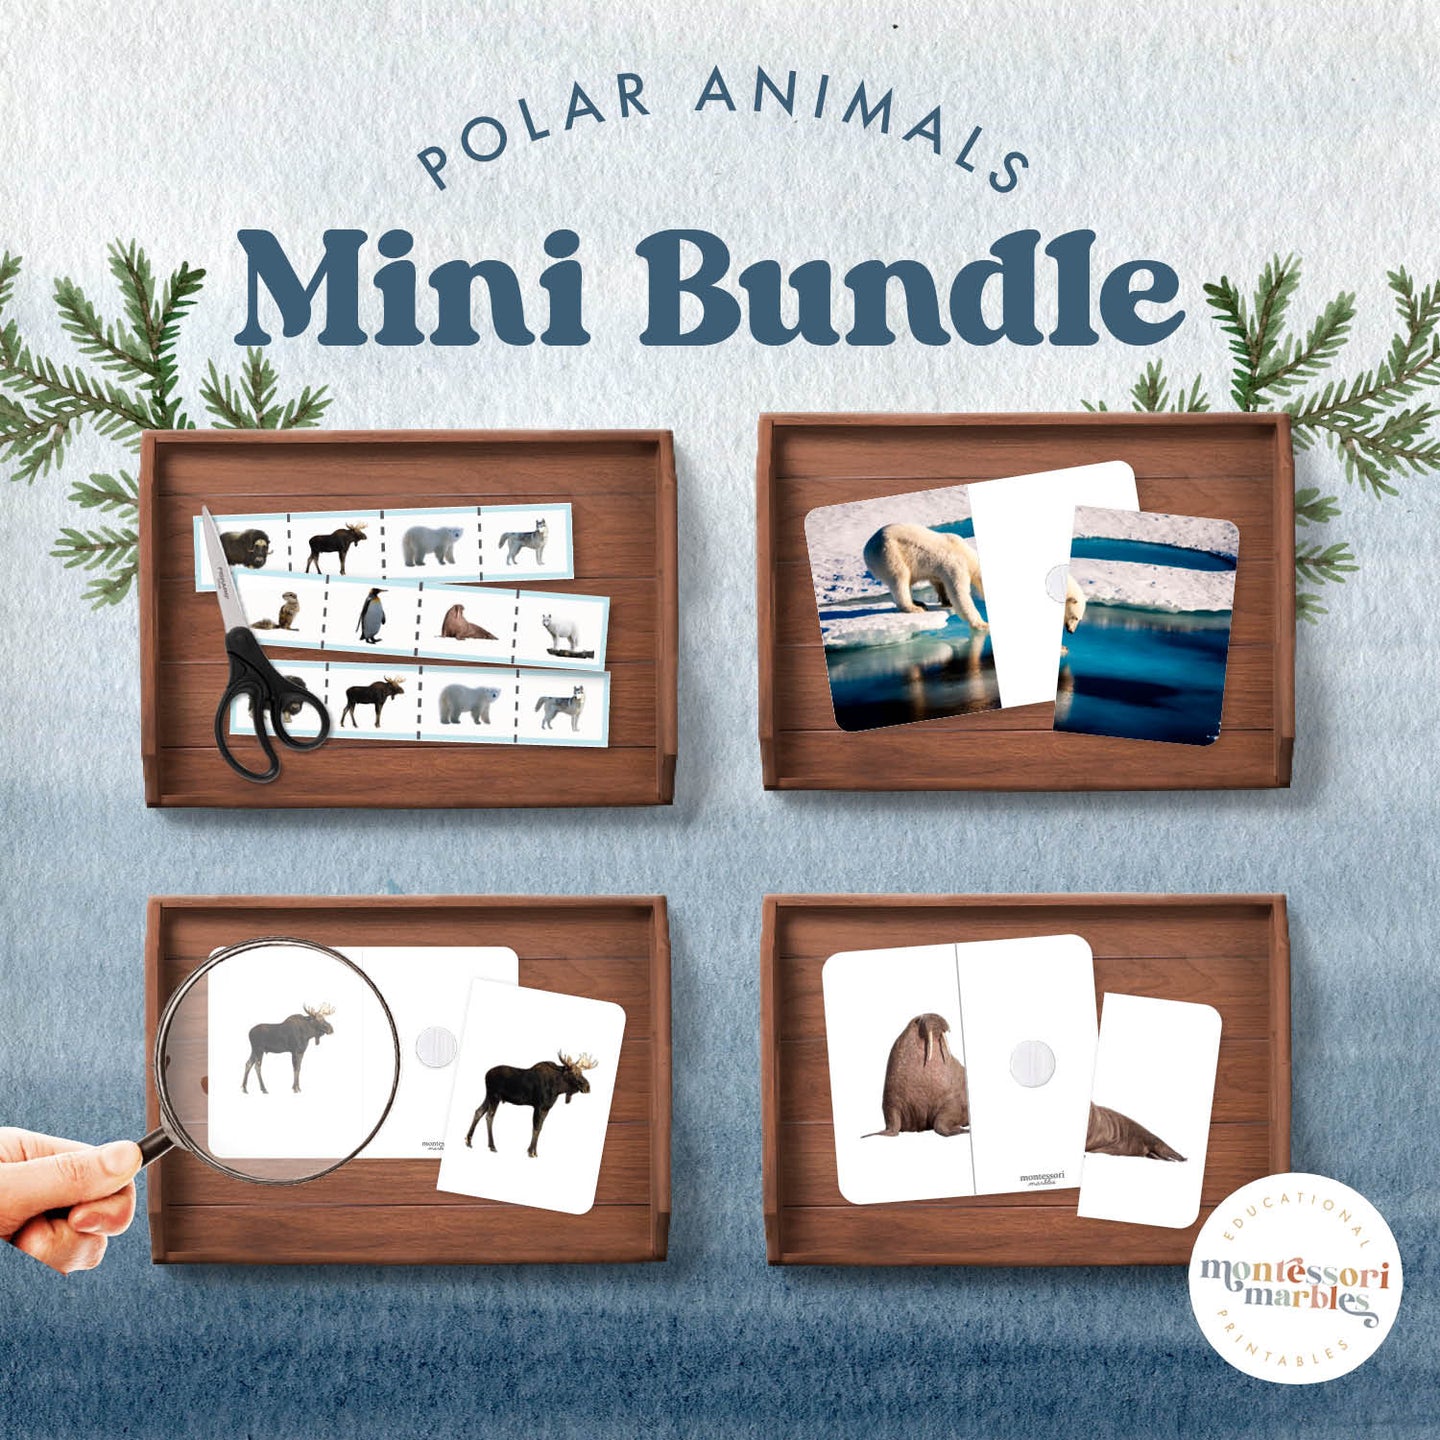 Polar Animals Mini Bundle